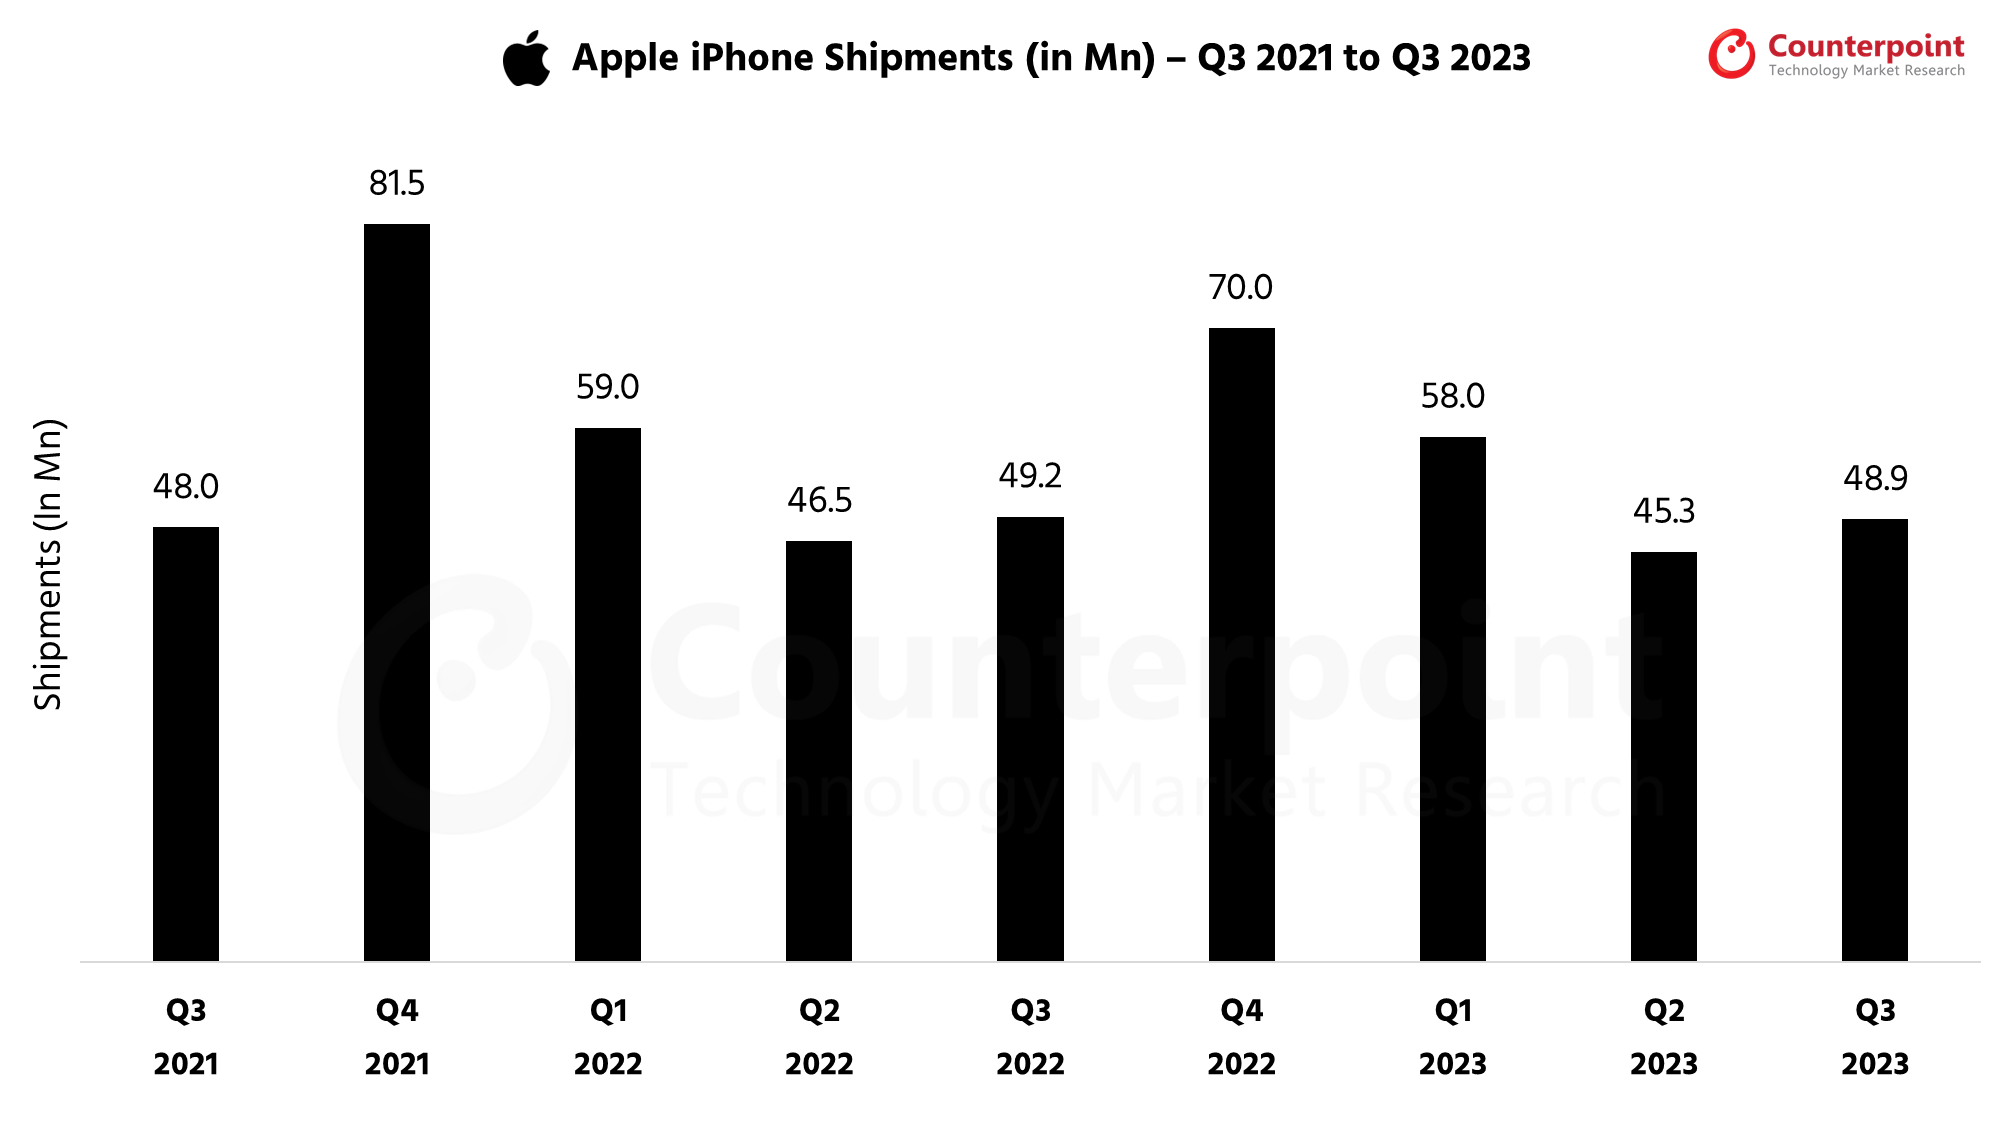 Apple iPhone Shipments Q3 2023